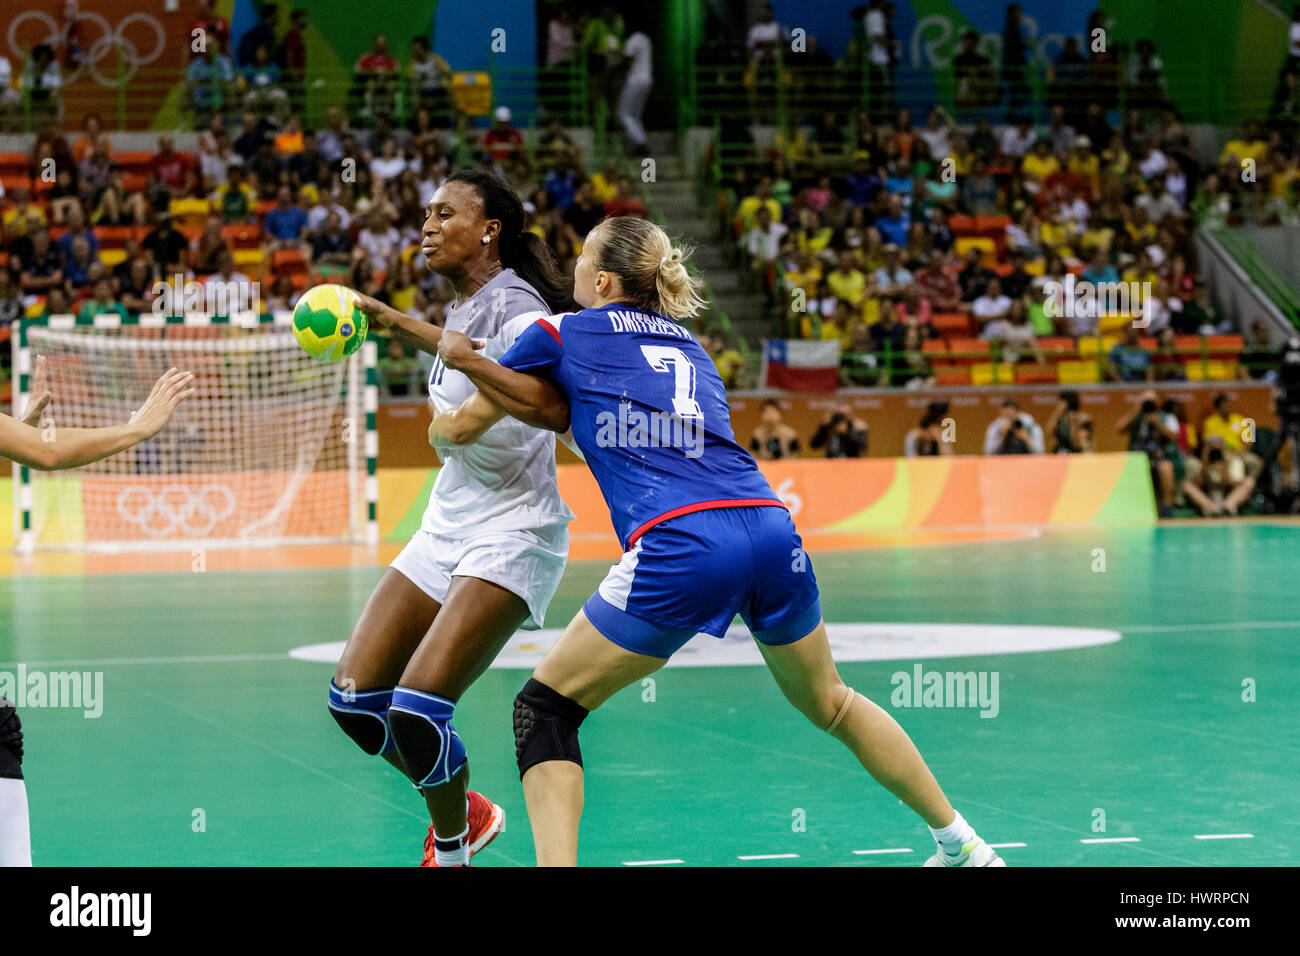 Rio de Janeiro, Brazil. 20 August 2016 Siraba Dembélé (FRA) #17 defended by Daria Dmitrieva (RUS)  #7 in the women's handball gold medal match Russia  Stock Photo